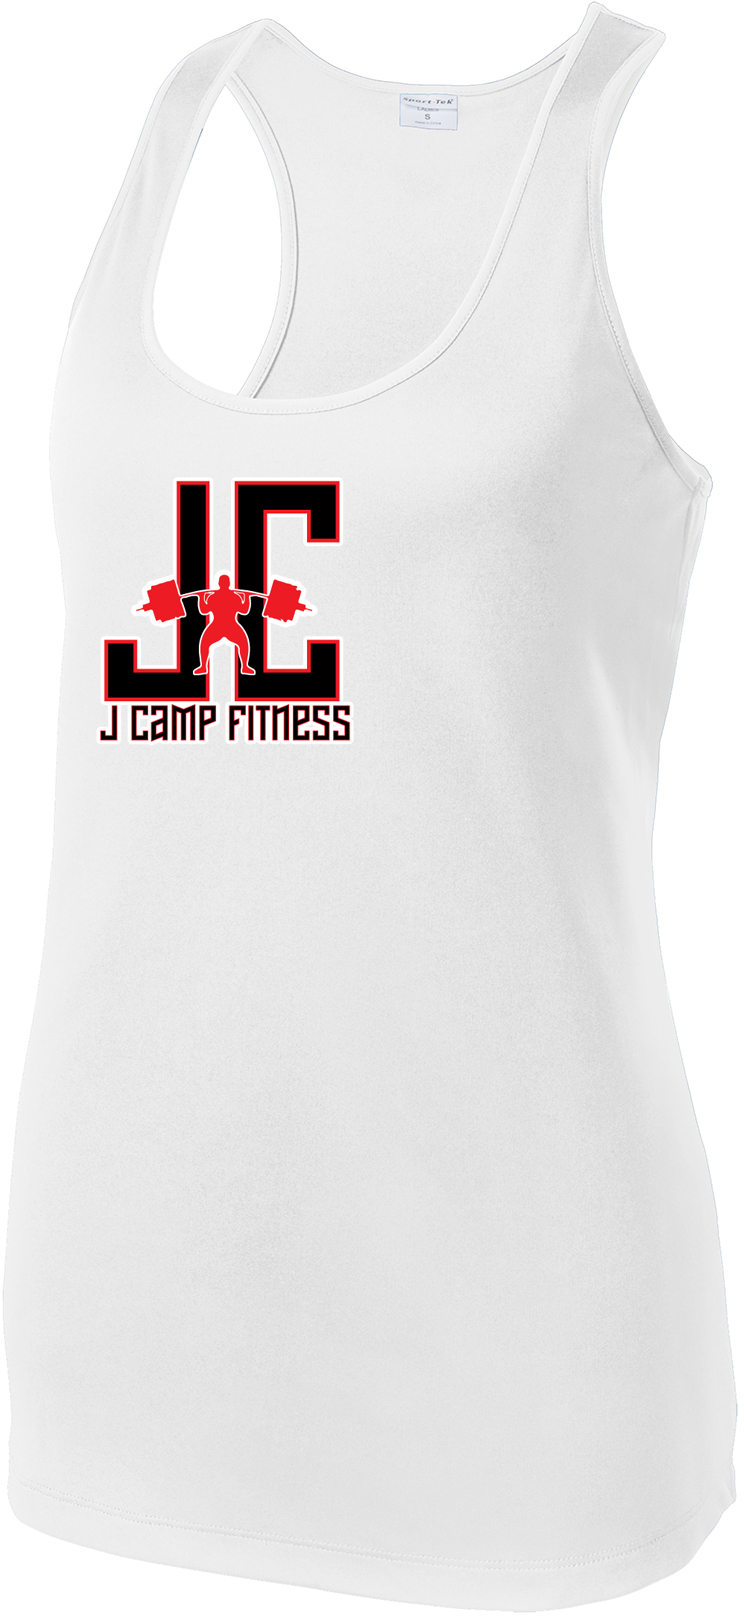 J Camp Fitness Women's Racerback Tank